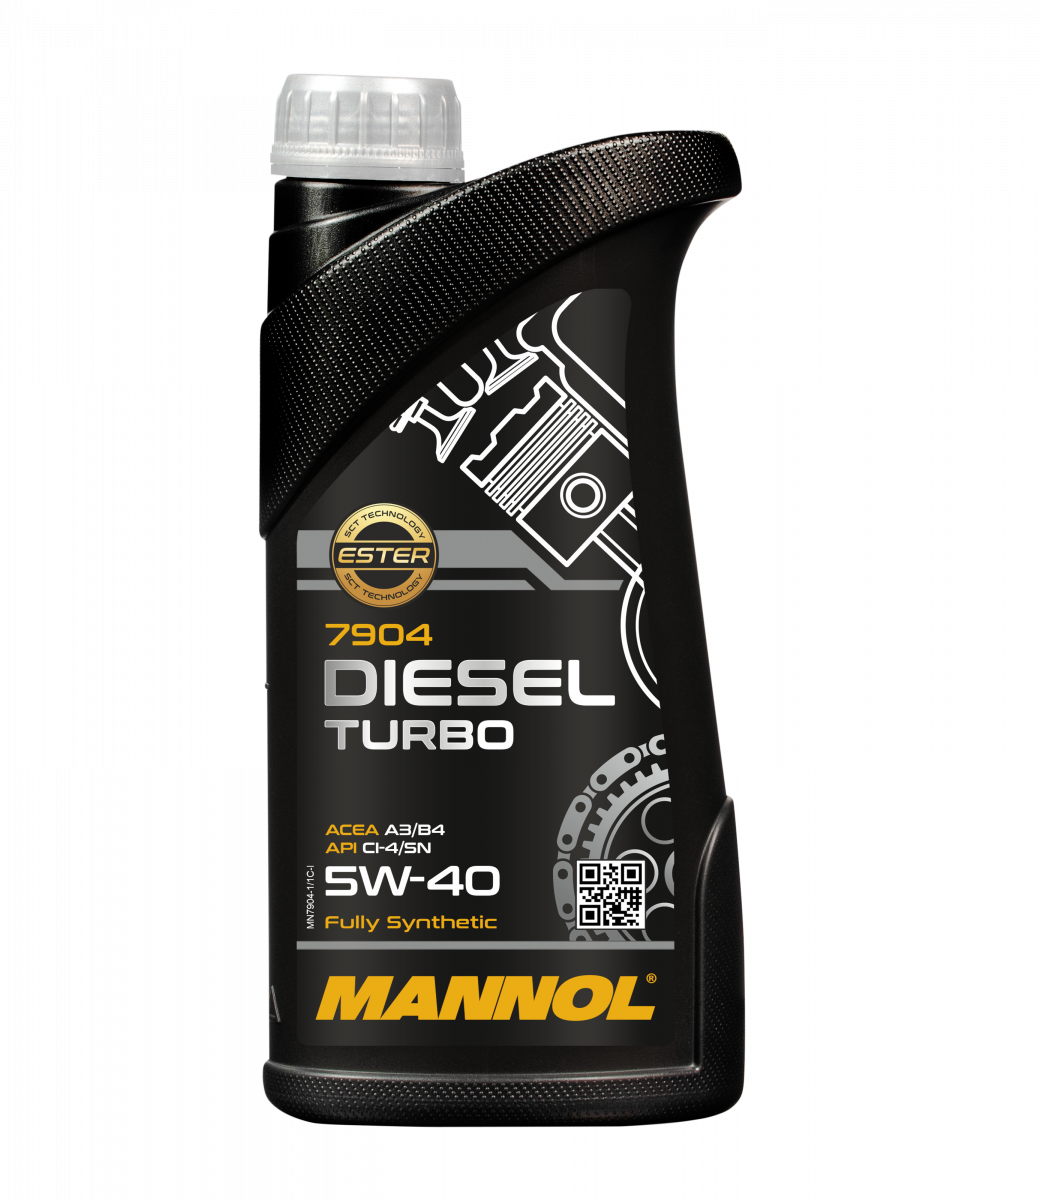 https://mannol.com.au/wp-content/uploads/2022/10/MANNOL-Diesel-Turbo-5W-40-7904-1.png